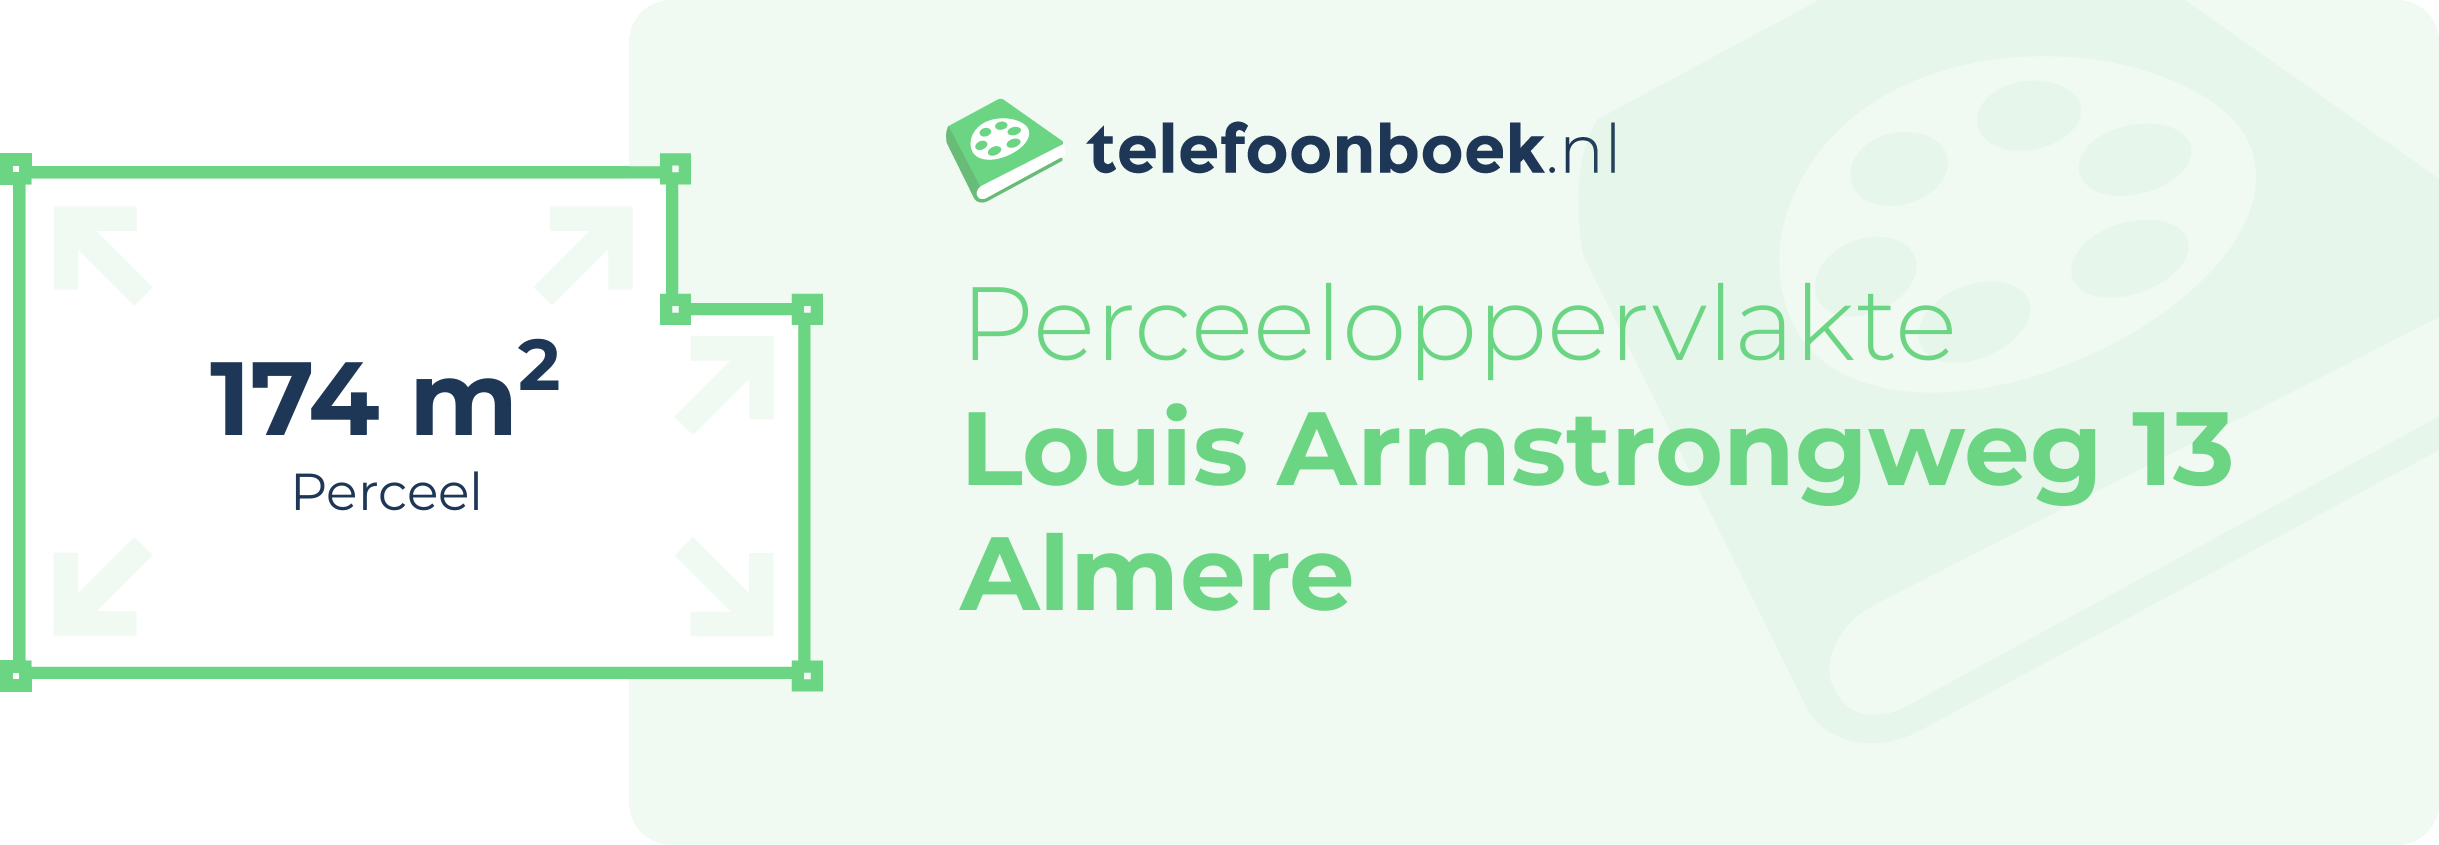 Perceeloppervlakte Louis Armstrongweg 13 Almere